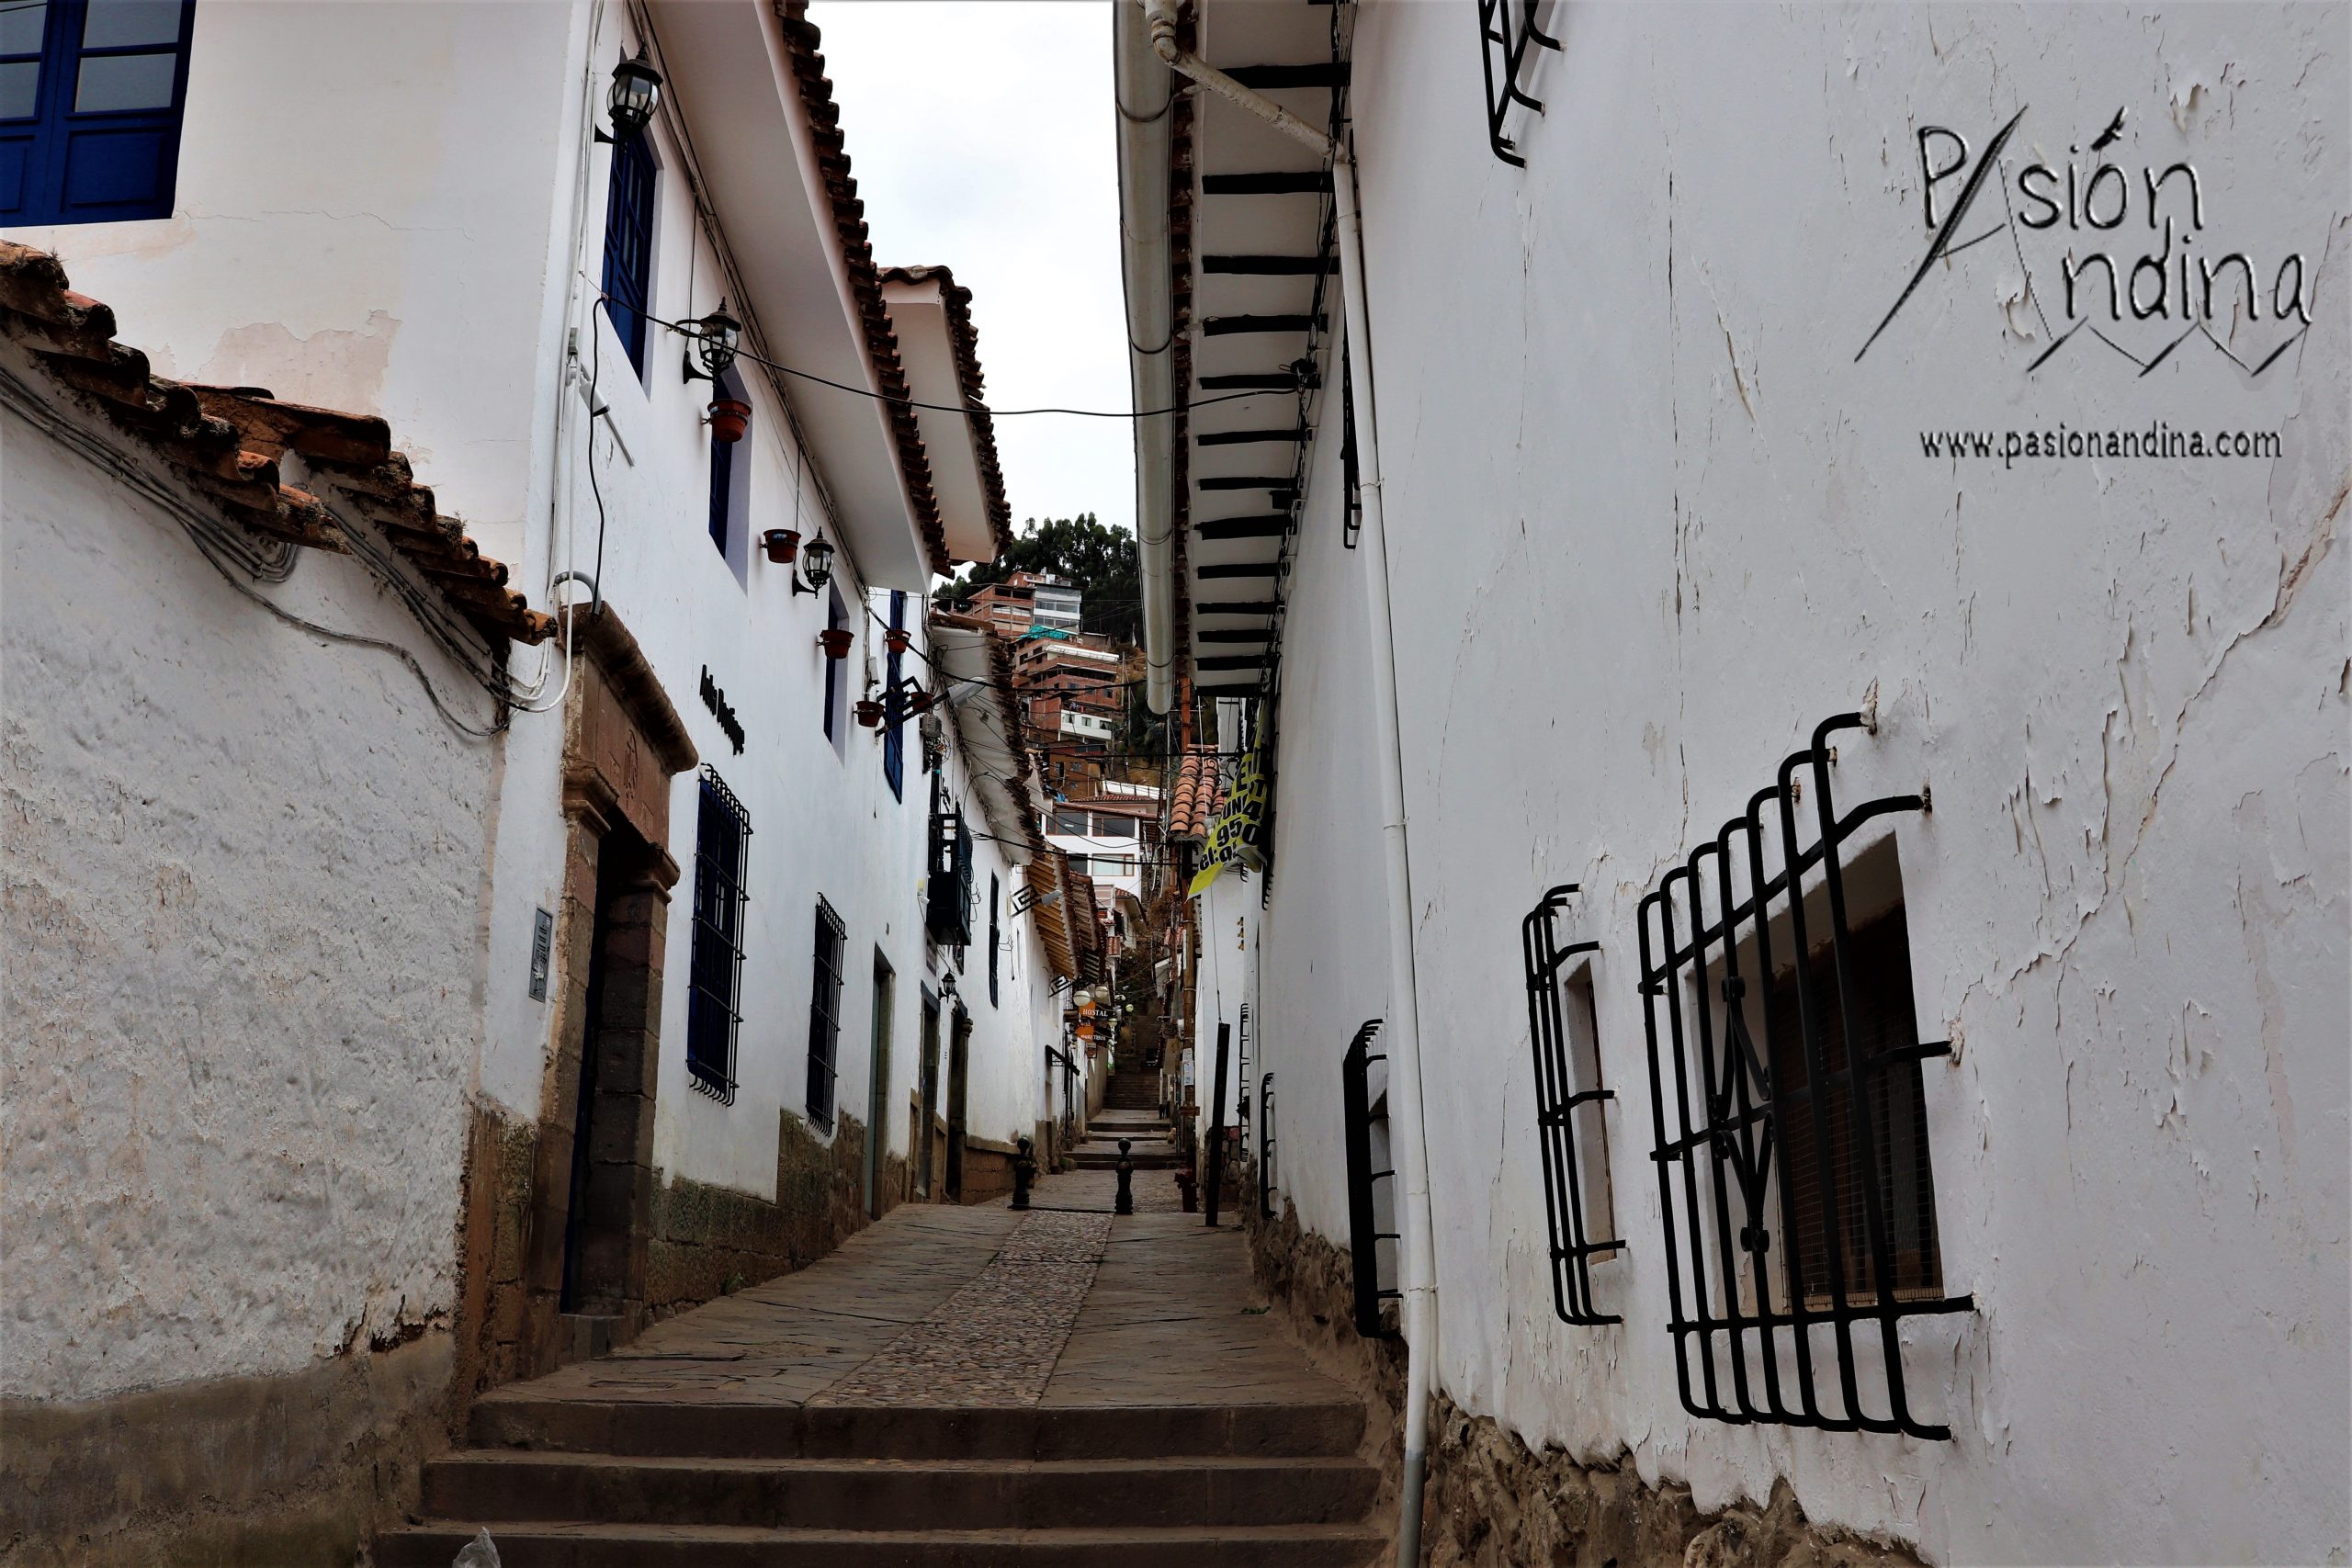 Calle Atoqsaykuchi - San Blas - Pasion Andina - Cusco